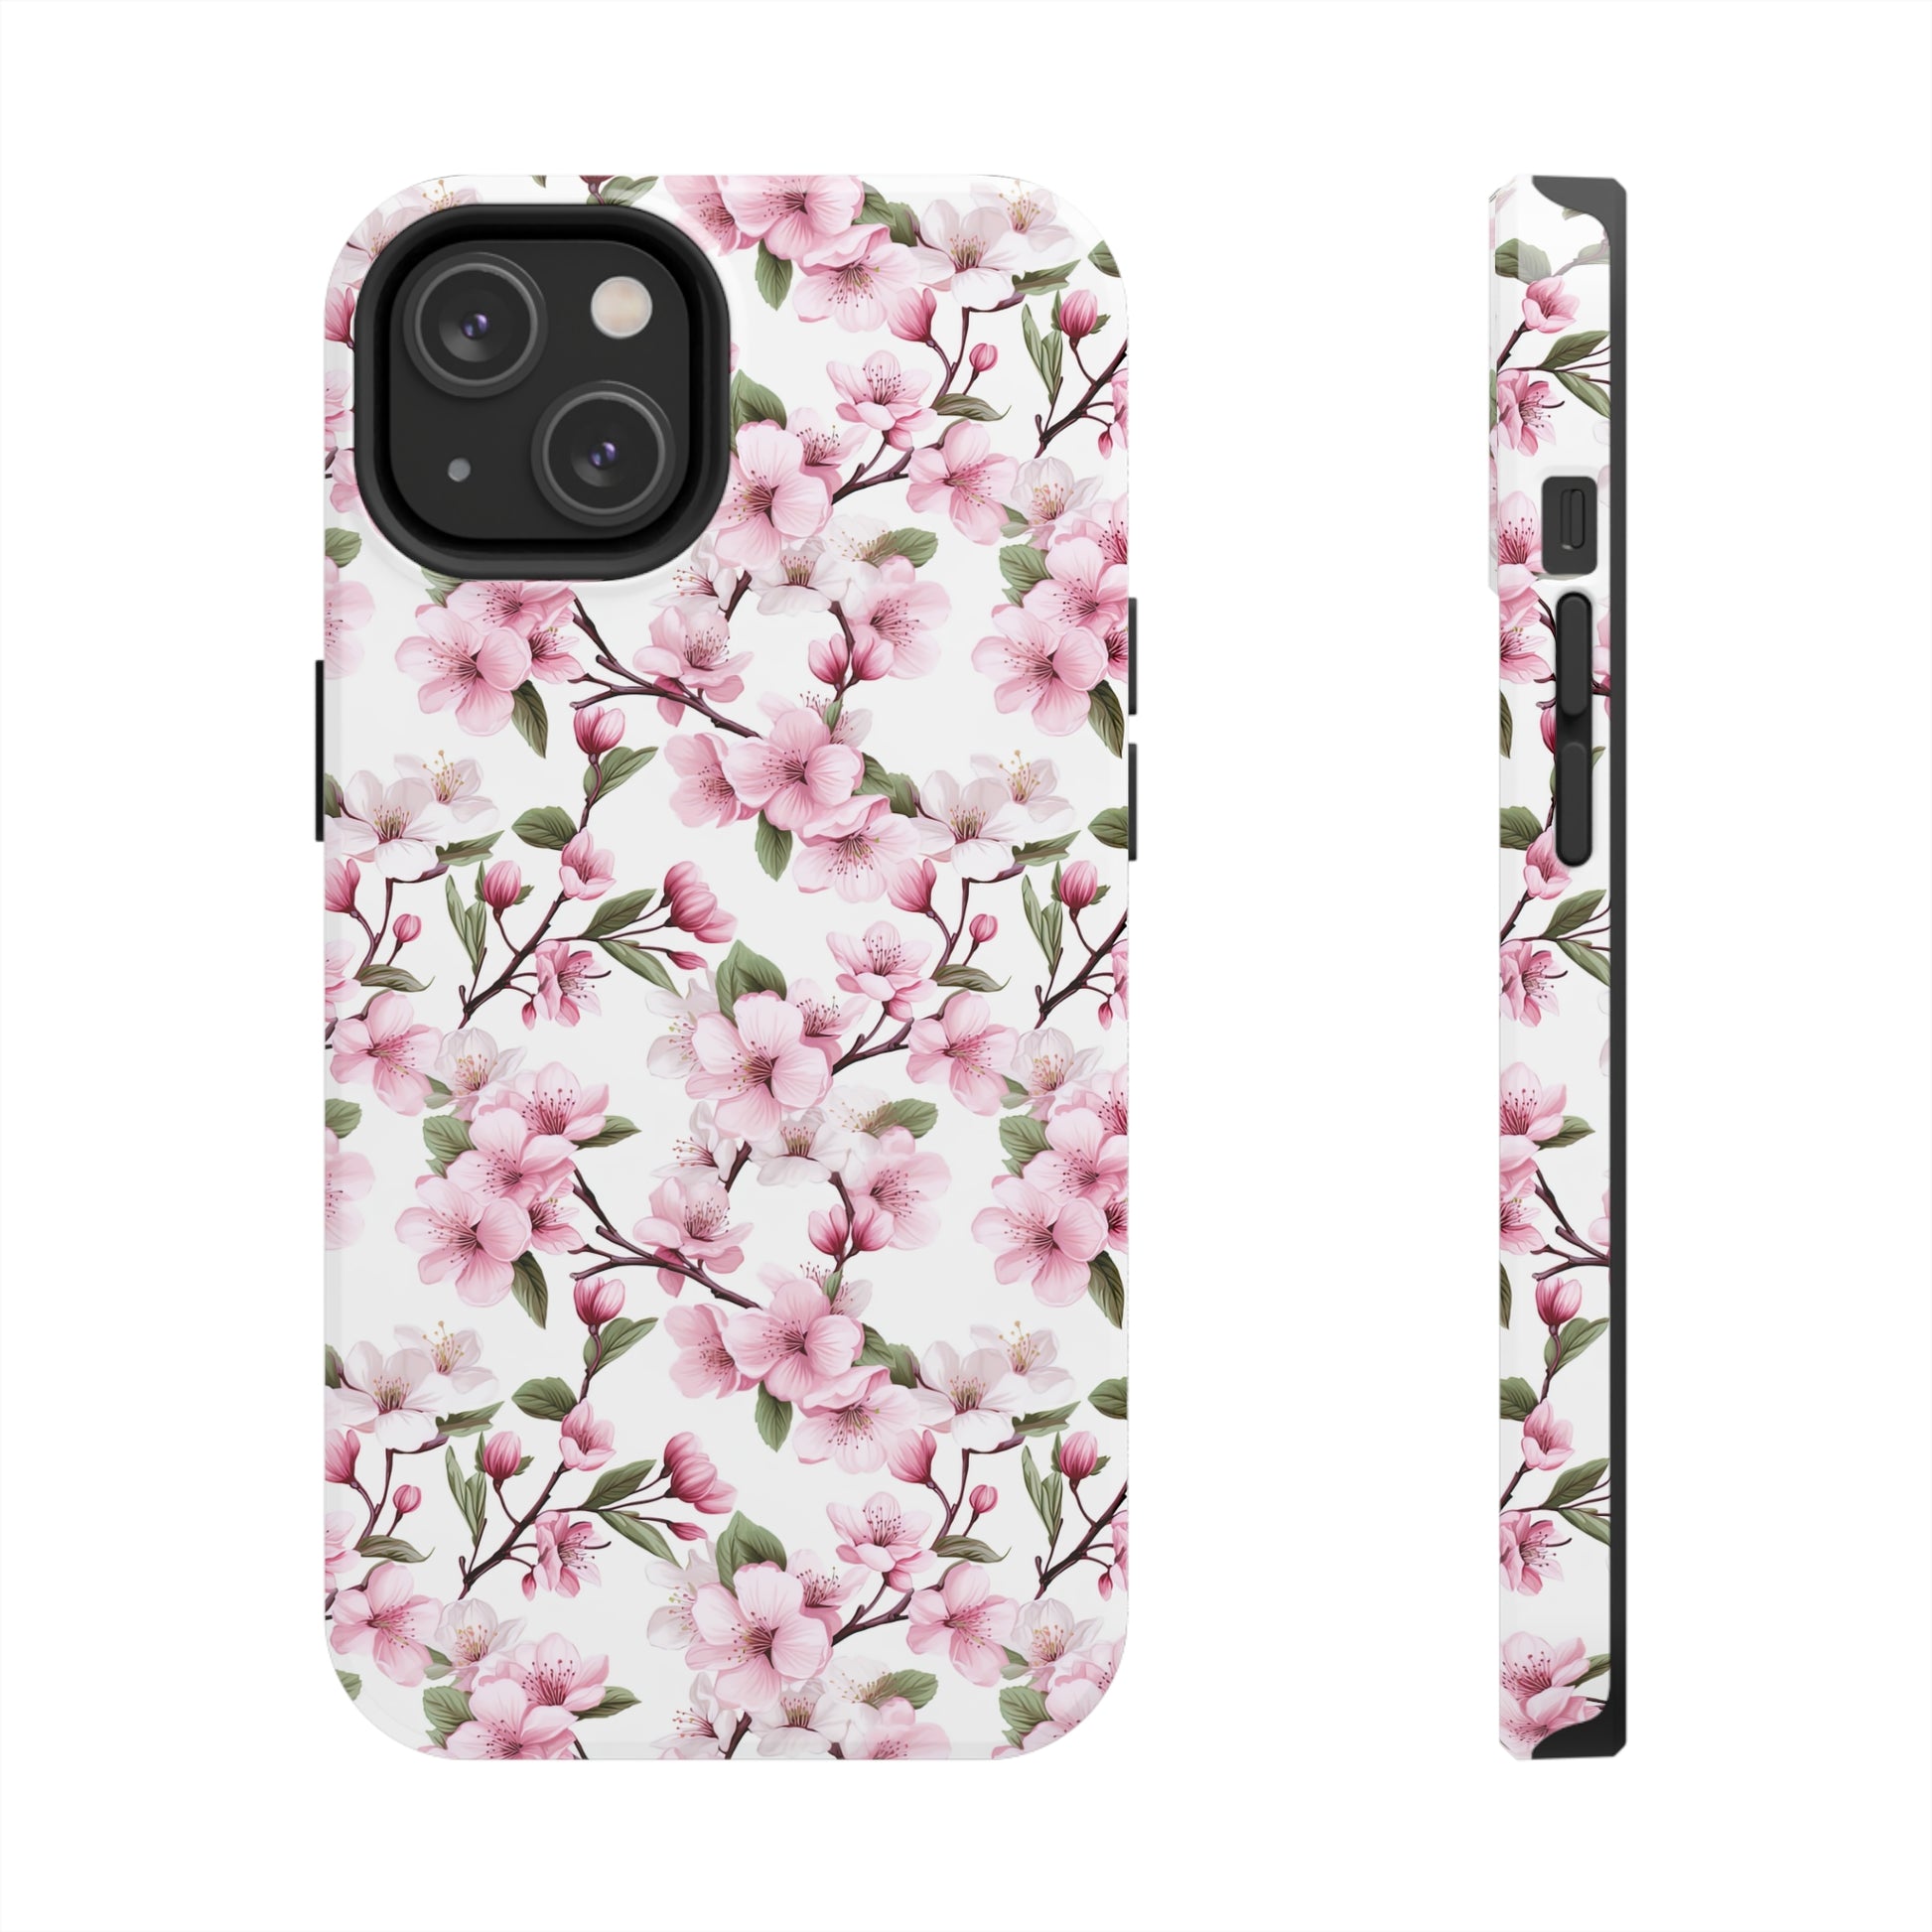 sakura pink cherry blossom iphone case